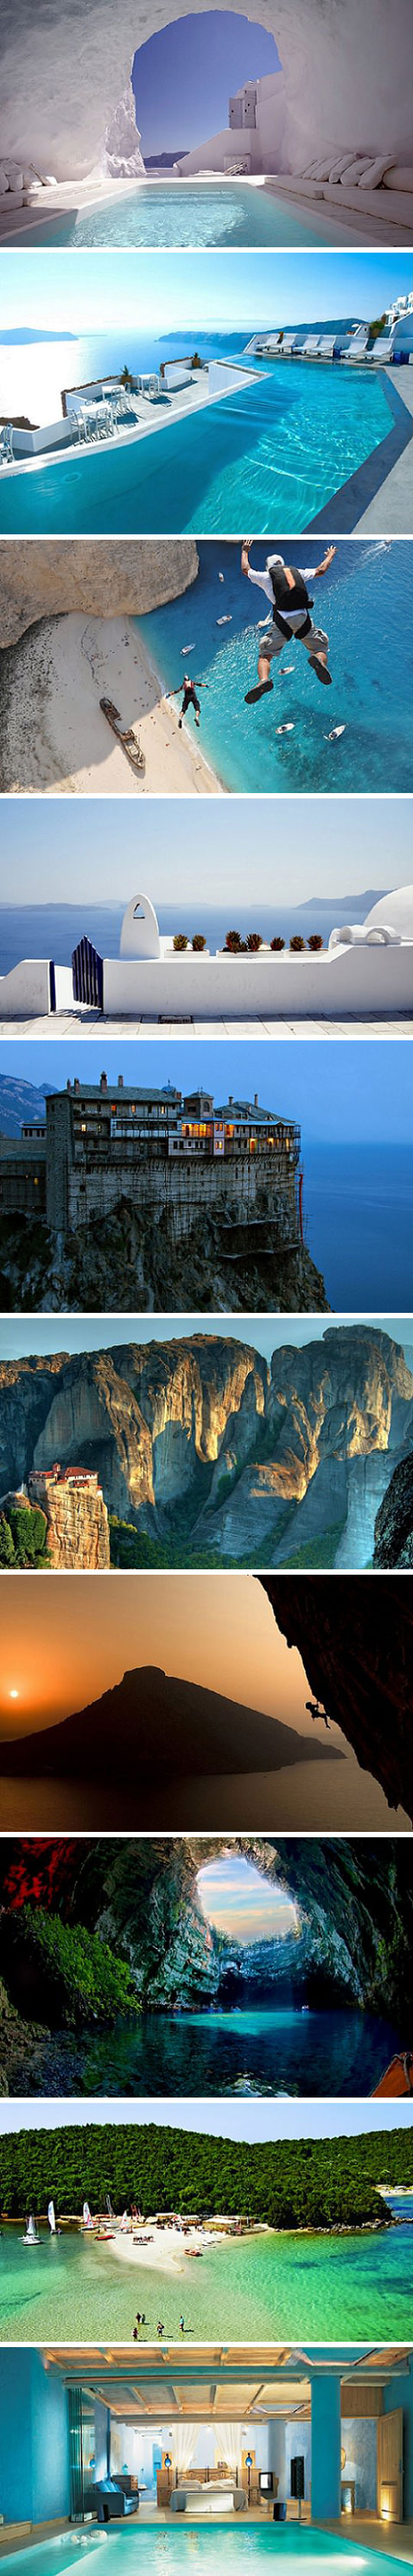 Greece-tourism-hotel-view